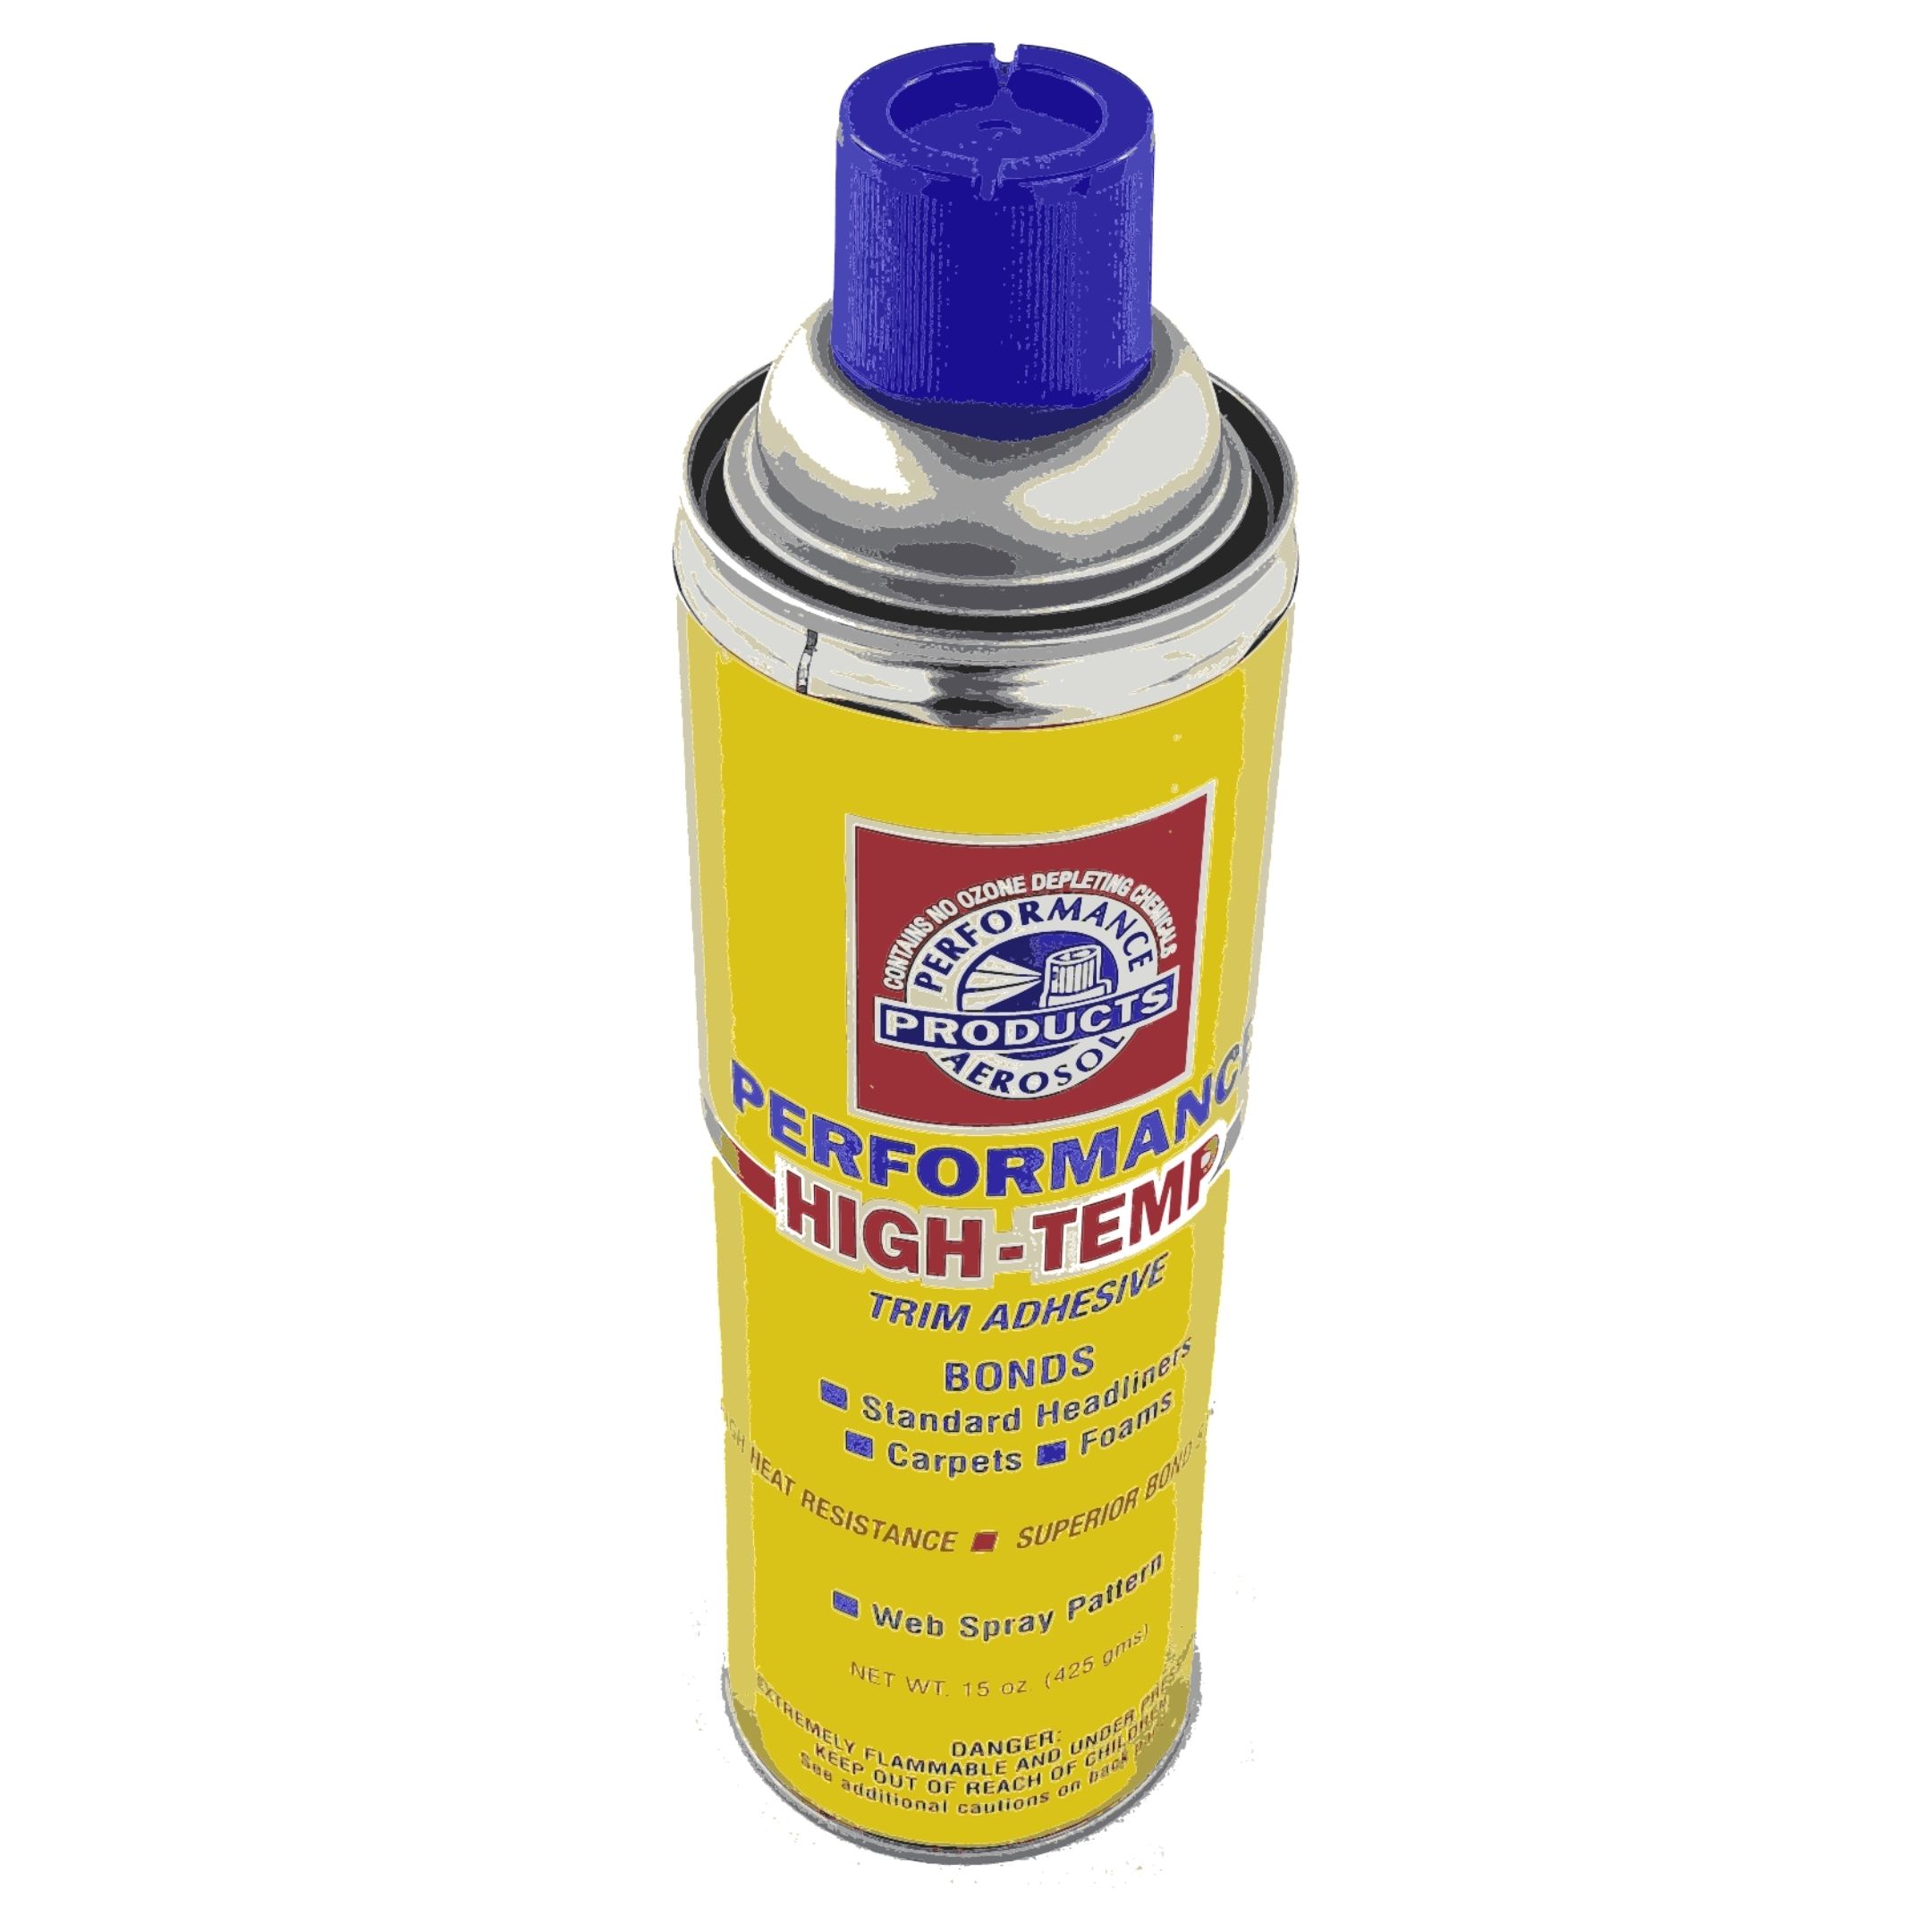 Spray Glue Adhesive Performance High Temp 12 OZ Cans of Headliners